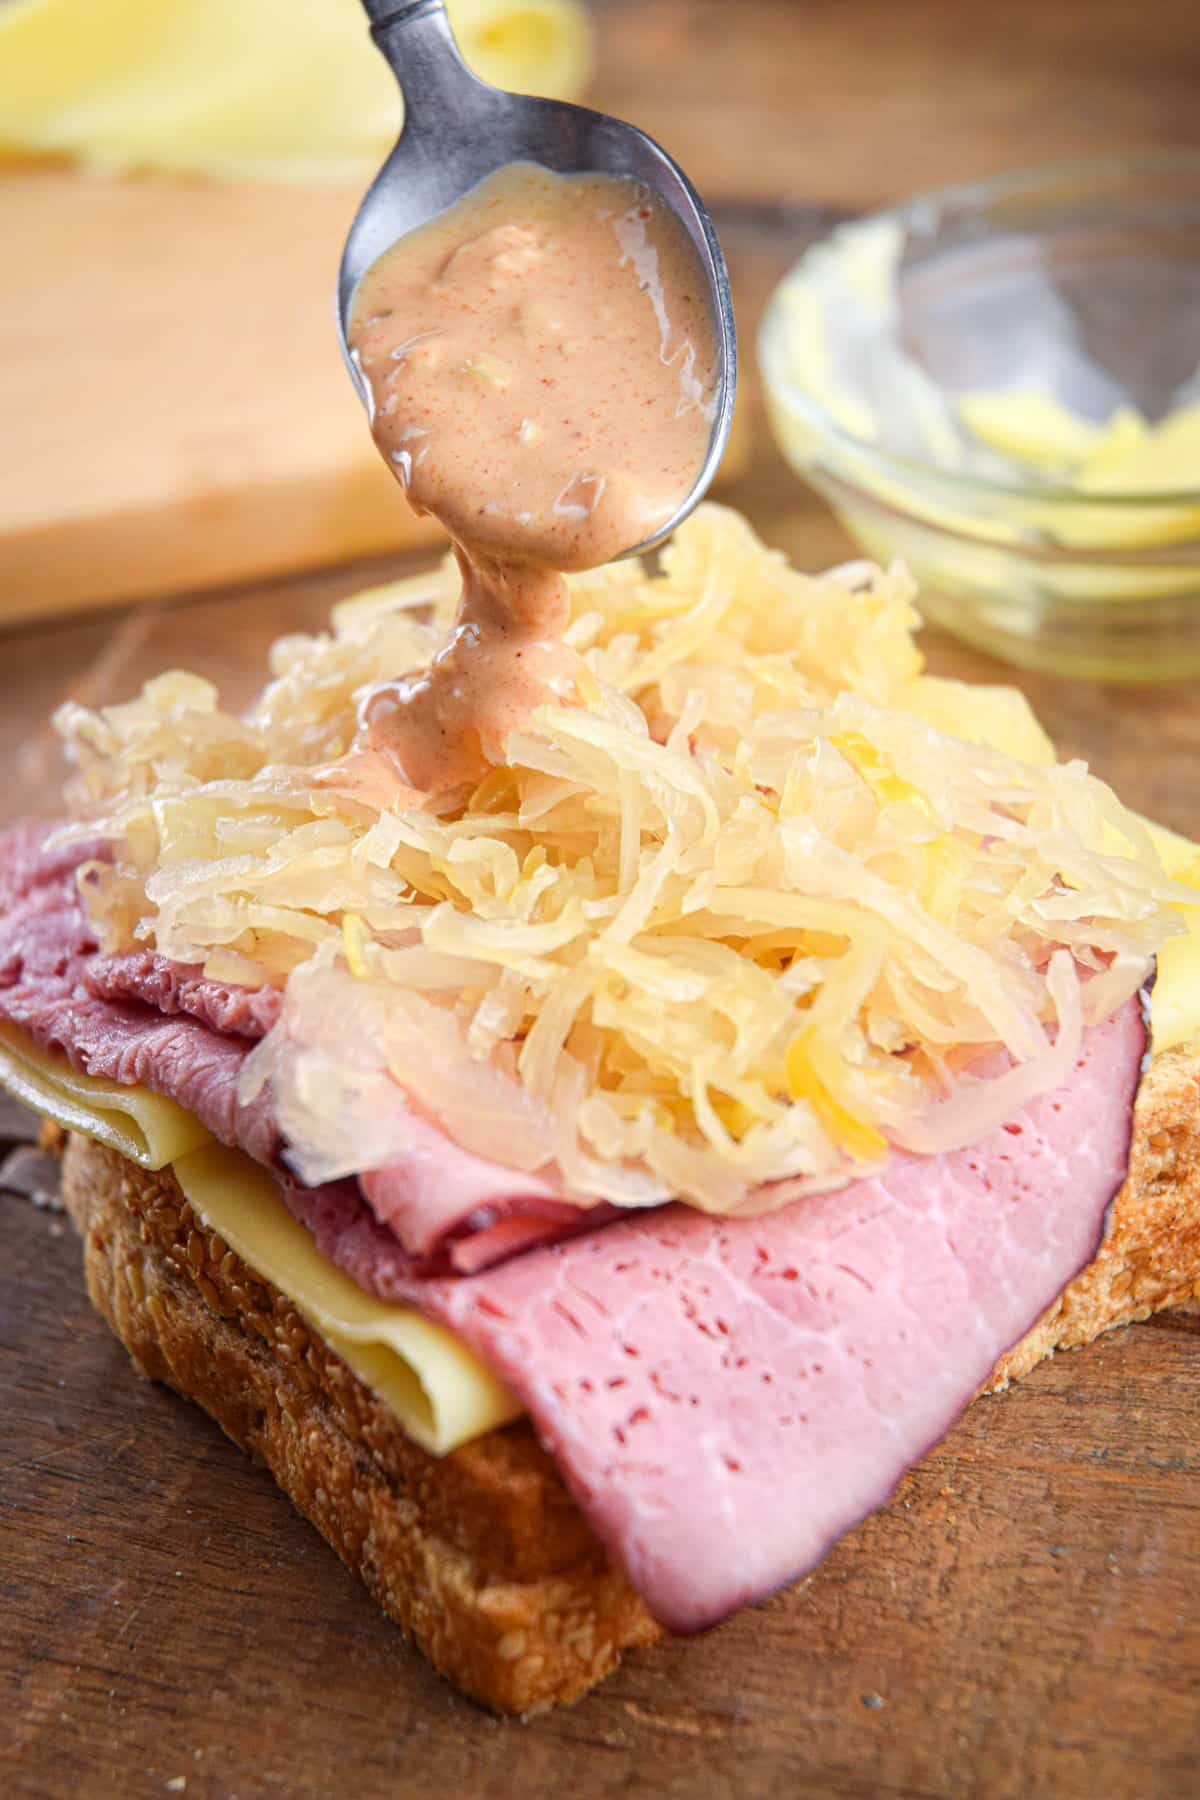 Sauerkraut, corned beef and Swiss cheese on bread.